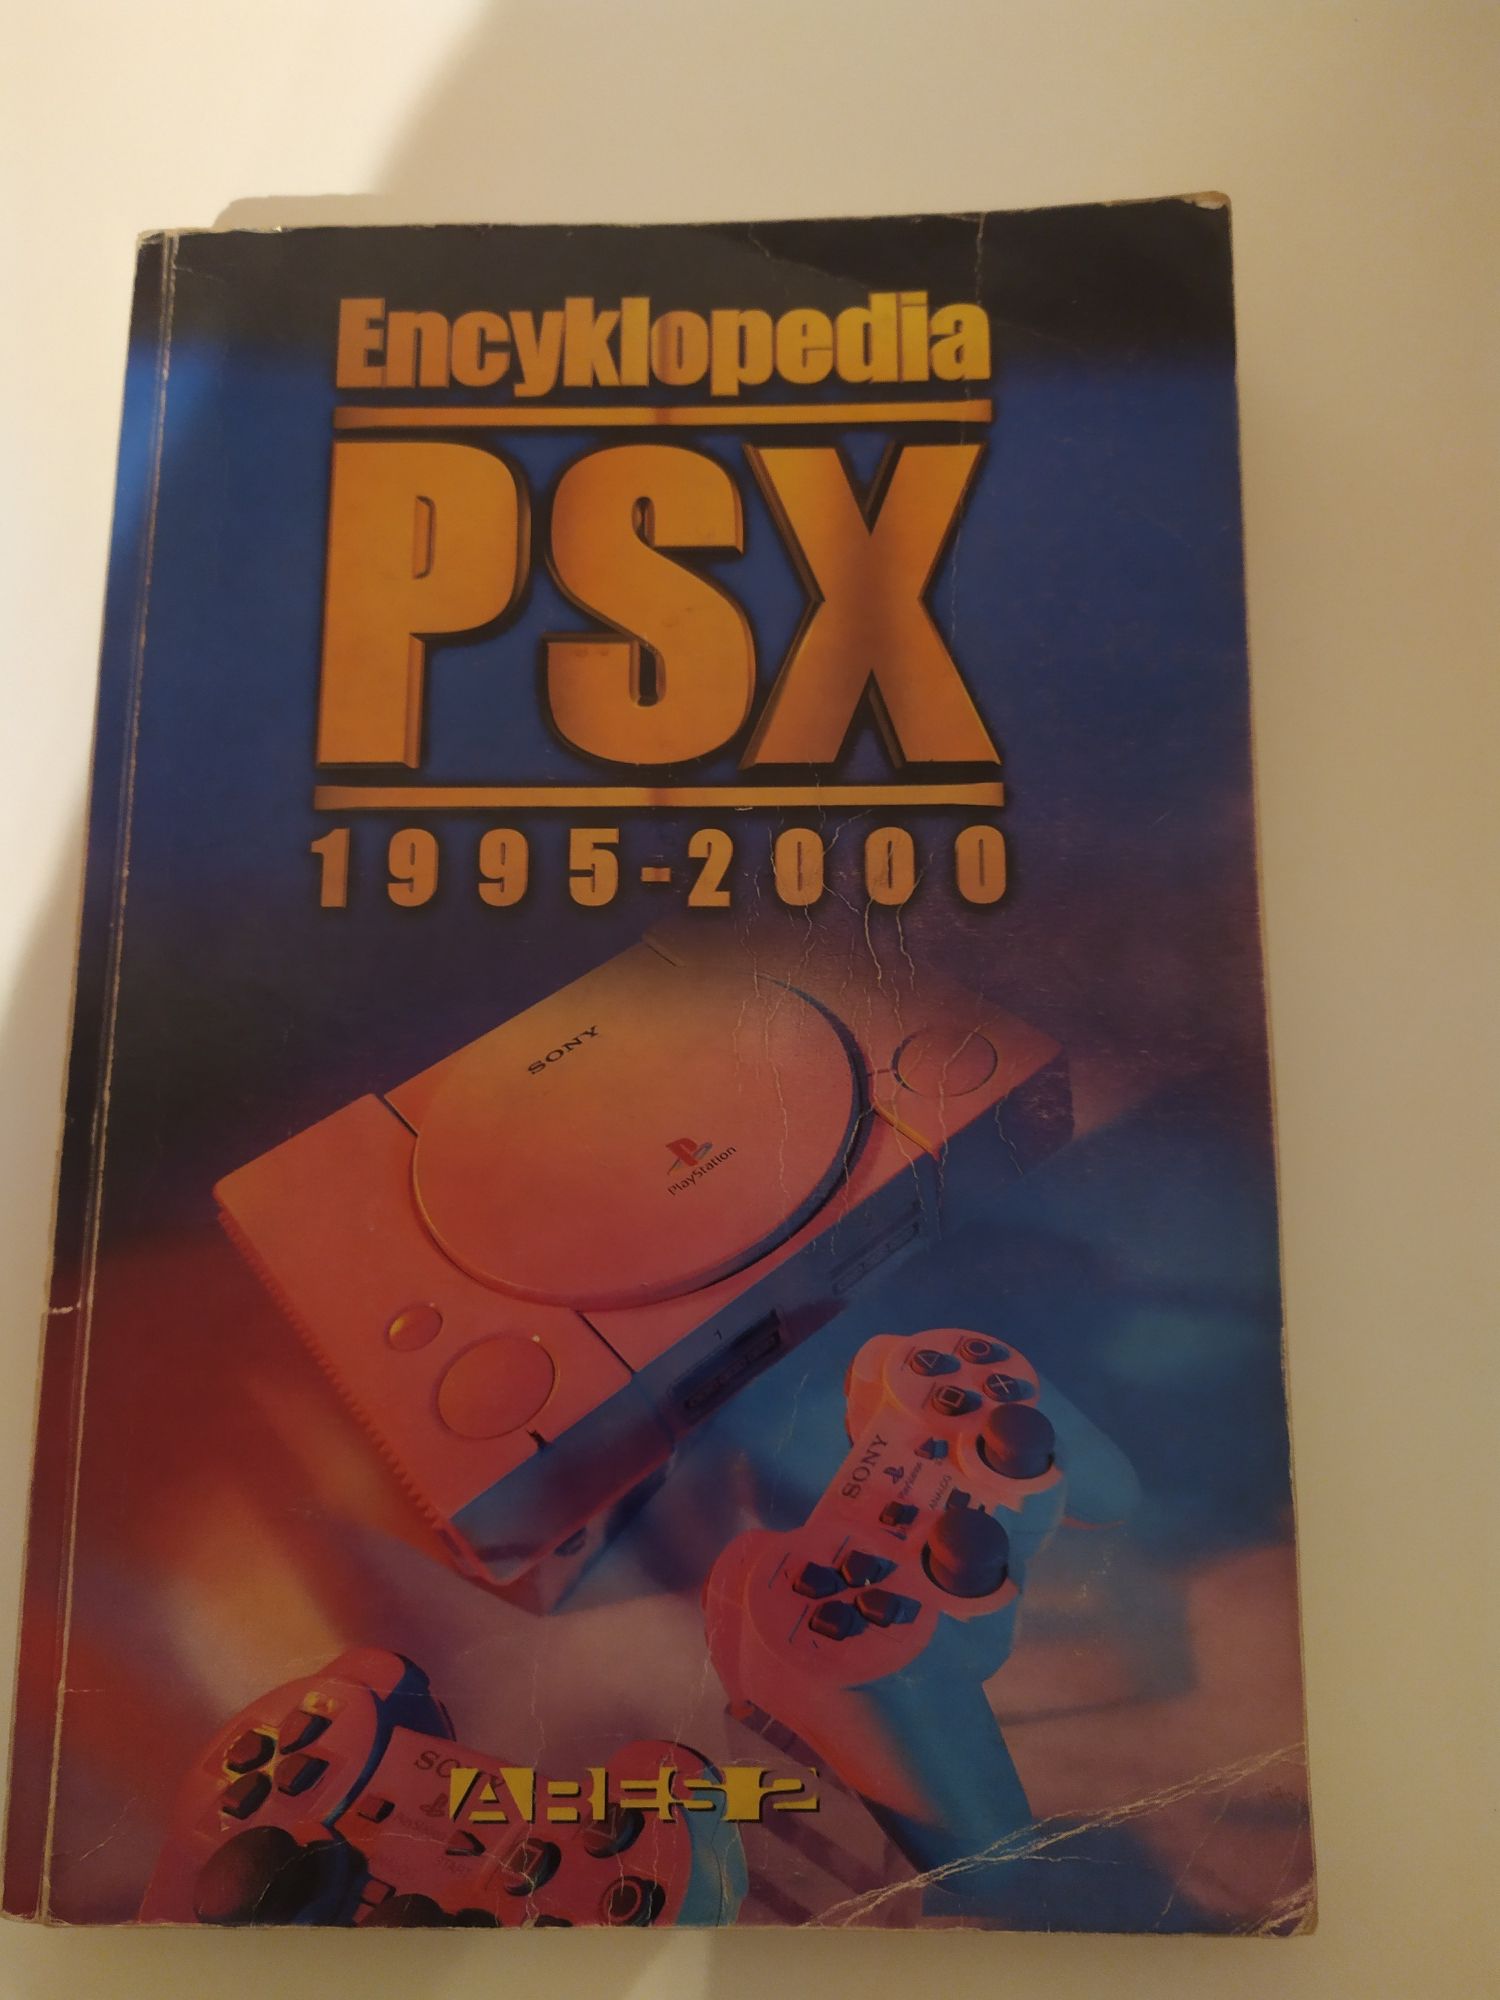 Encyklopedia PSX książka bardzo rzadka + DVD PS2